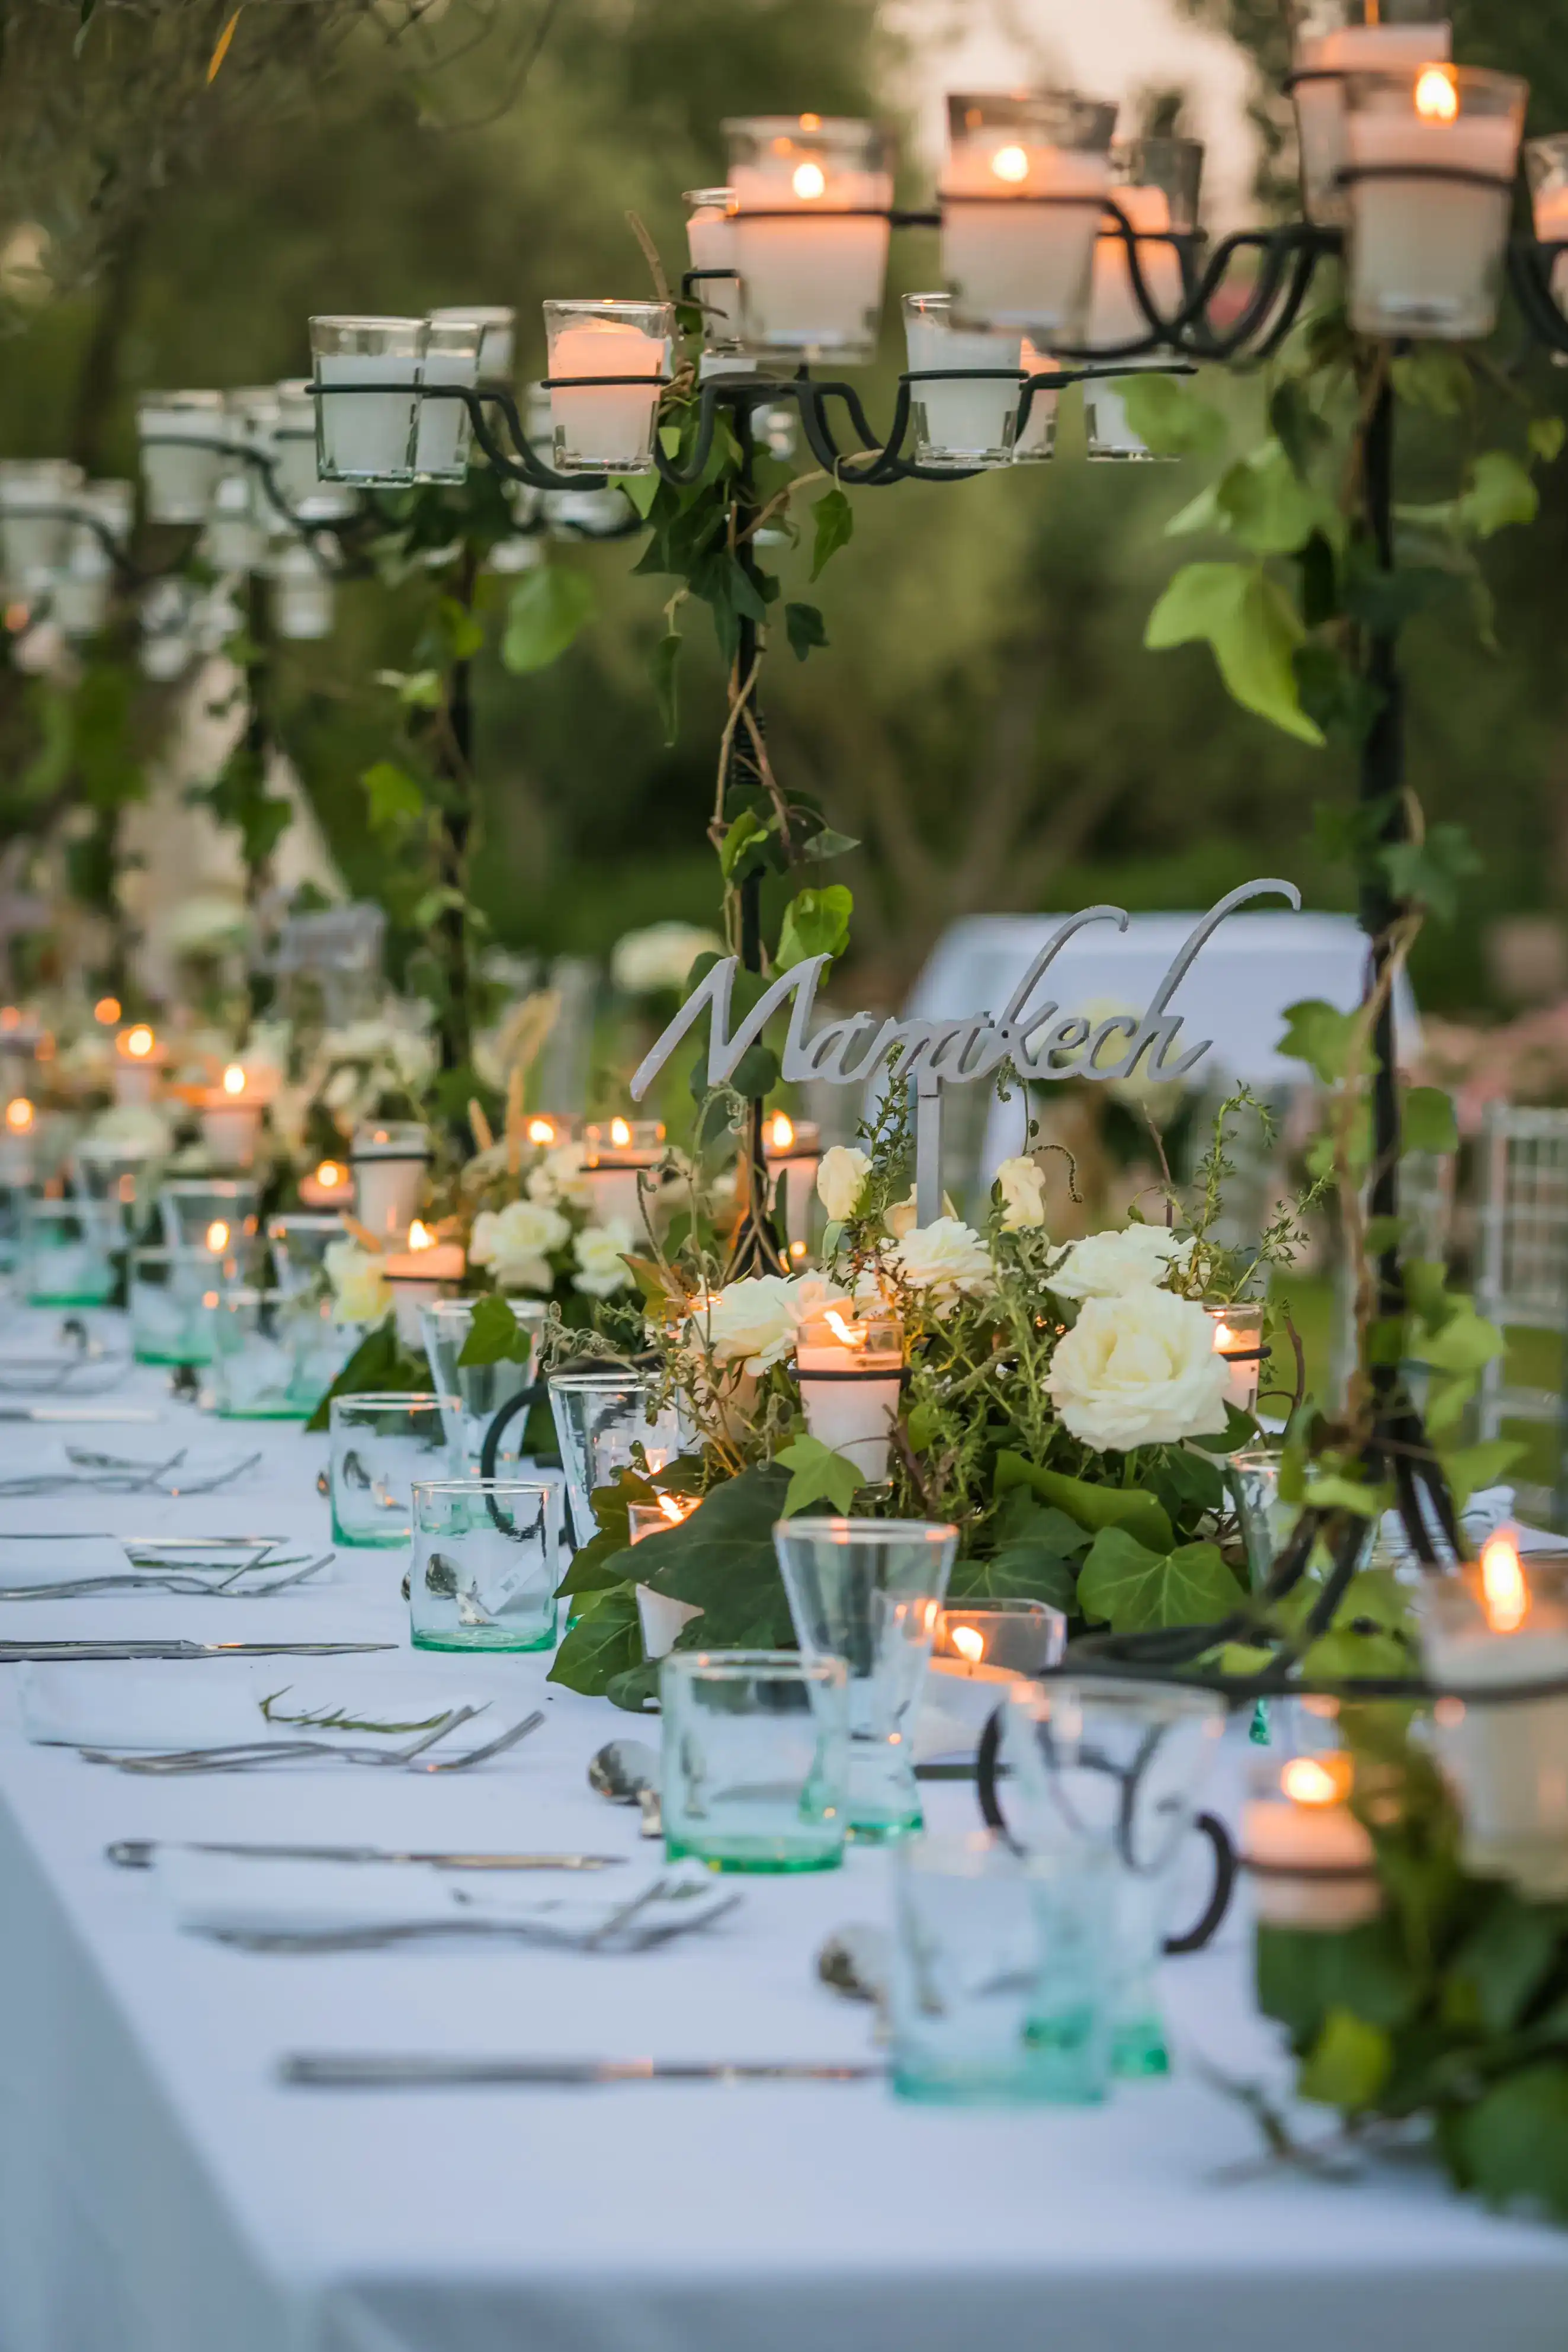 Beautiful Marrakech wedding table set